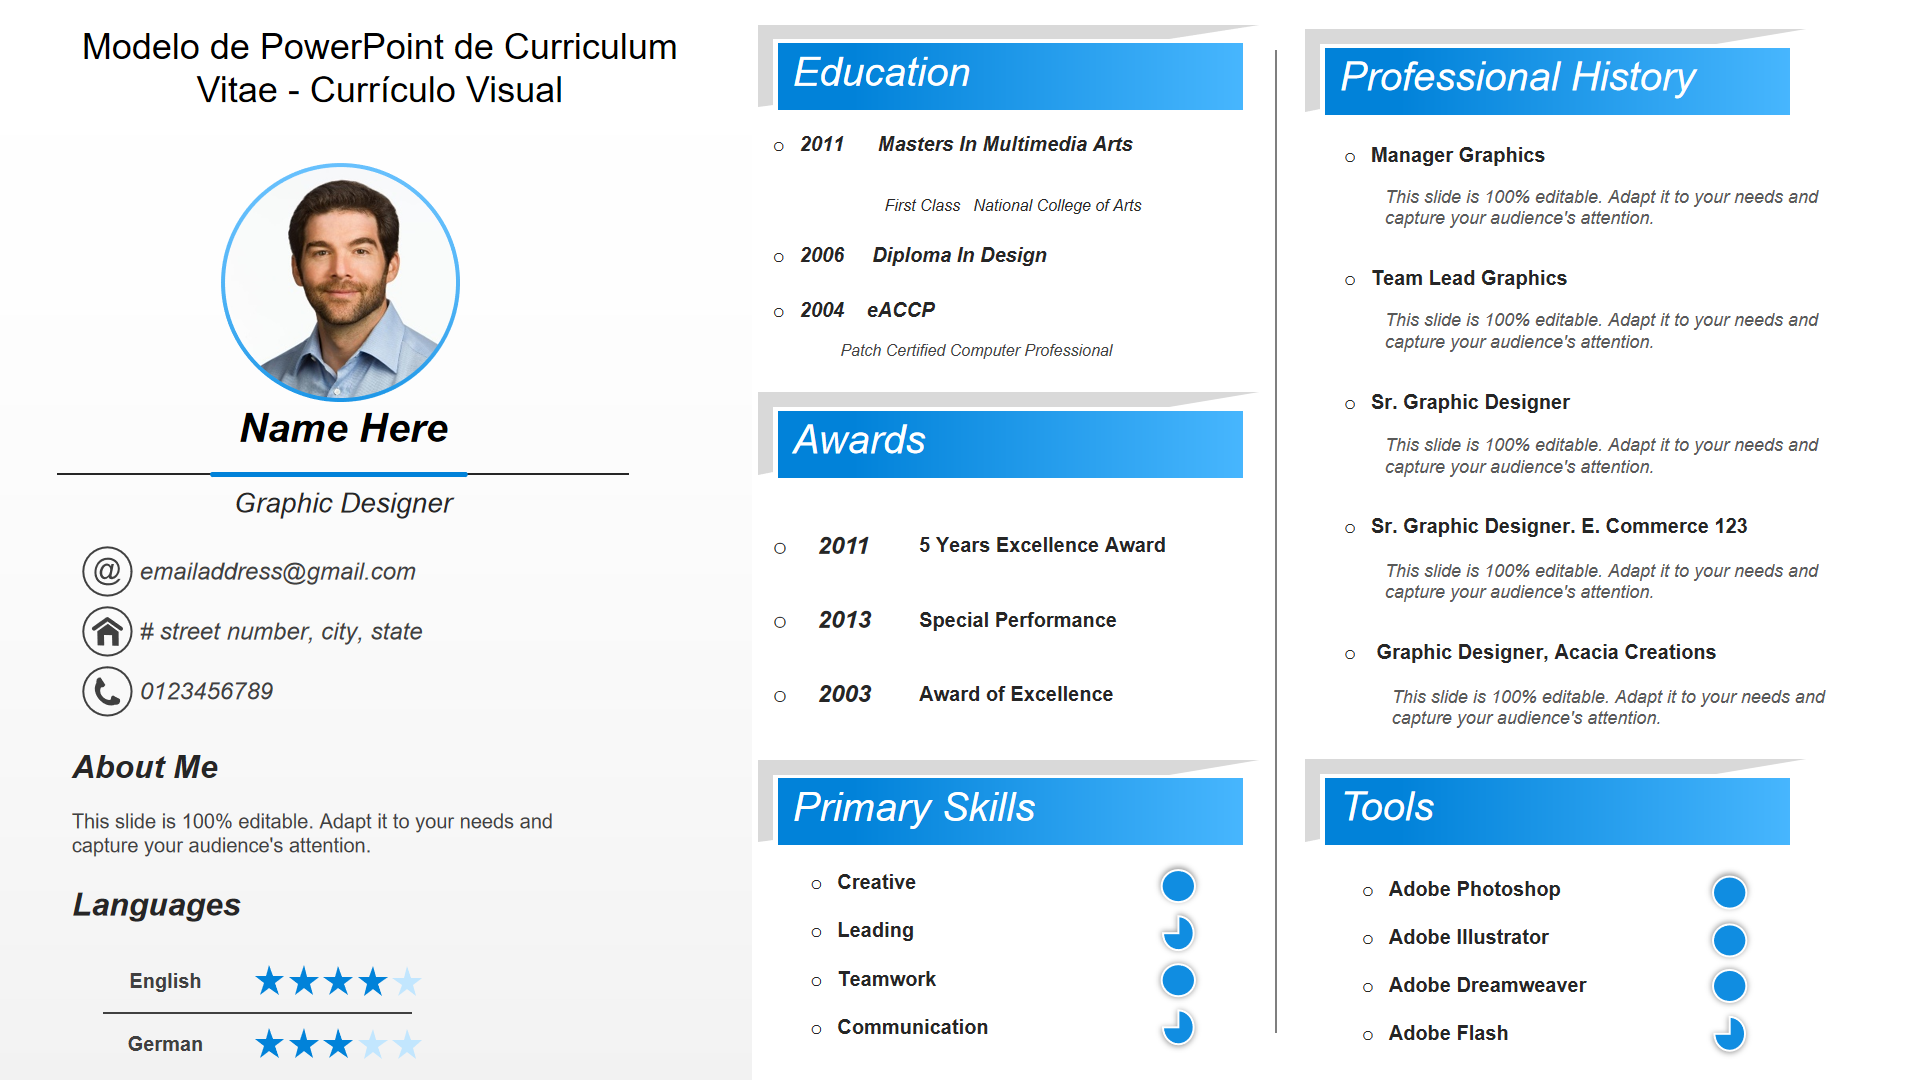 Modelo de PowerPoint de Curriculum Vitae - Currículo Visual